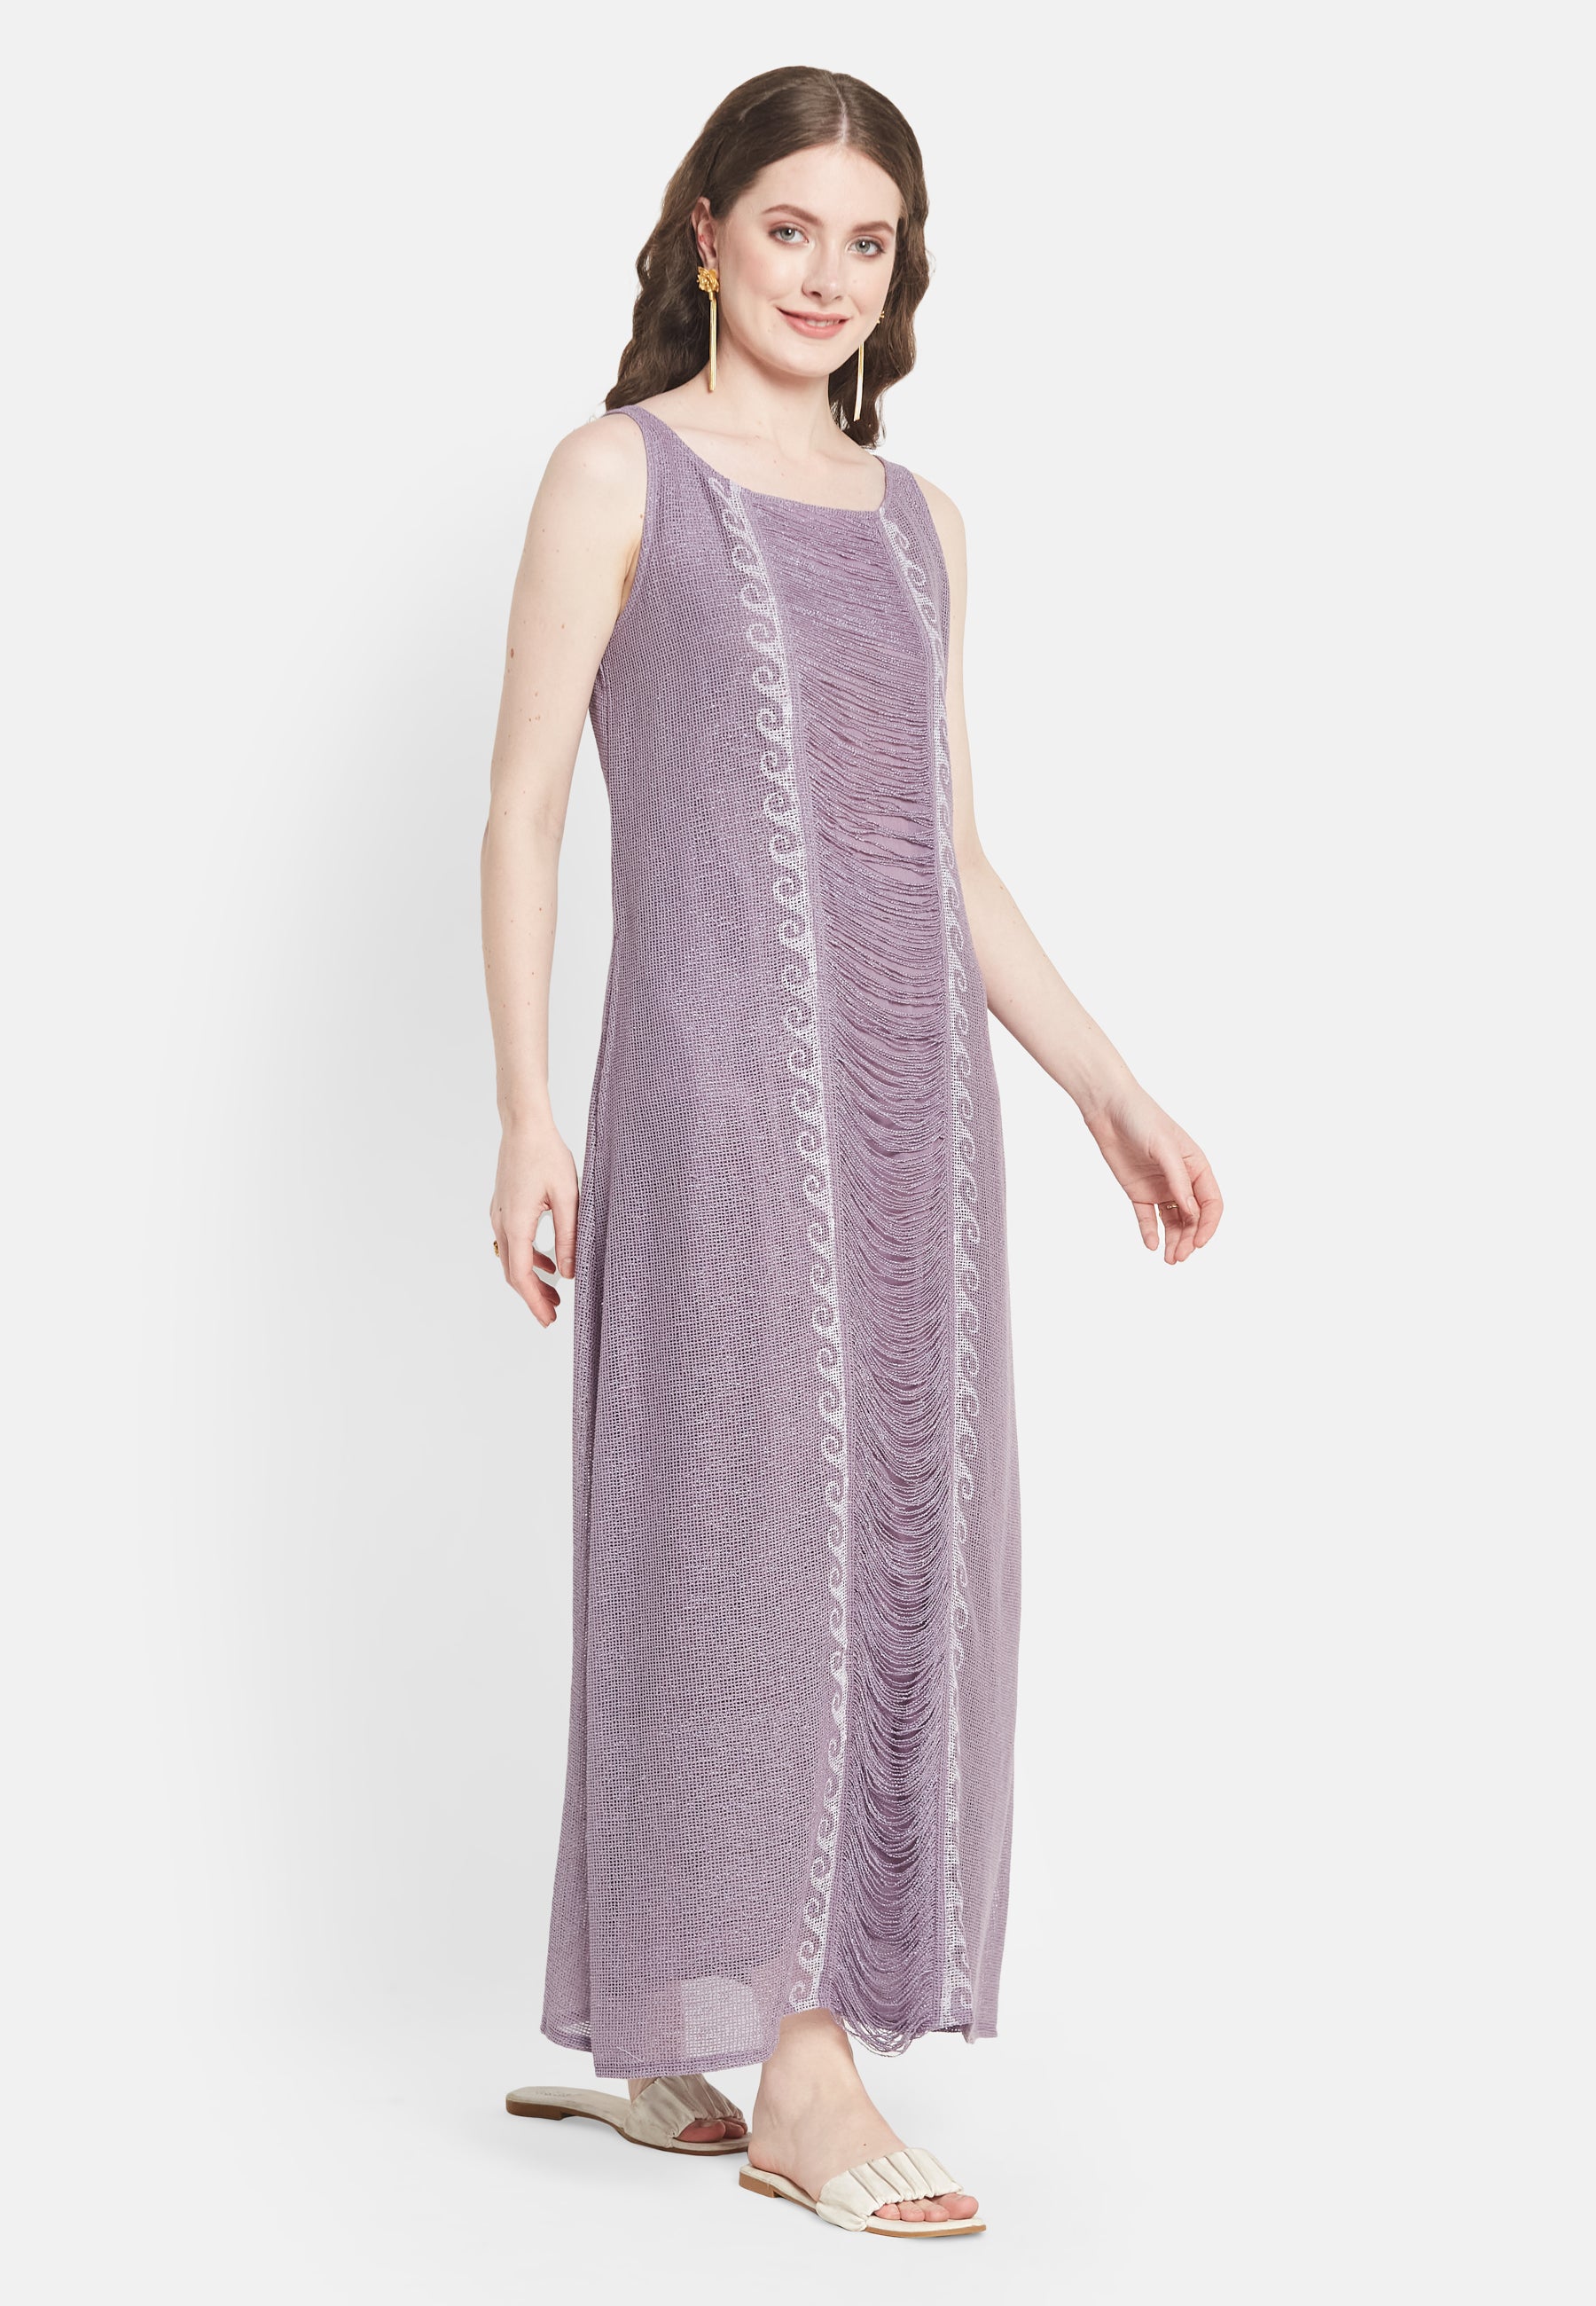 Freya Lavender Dress